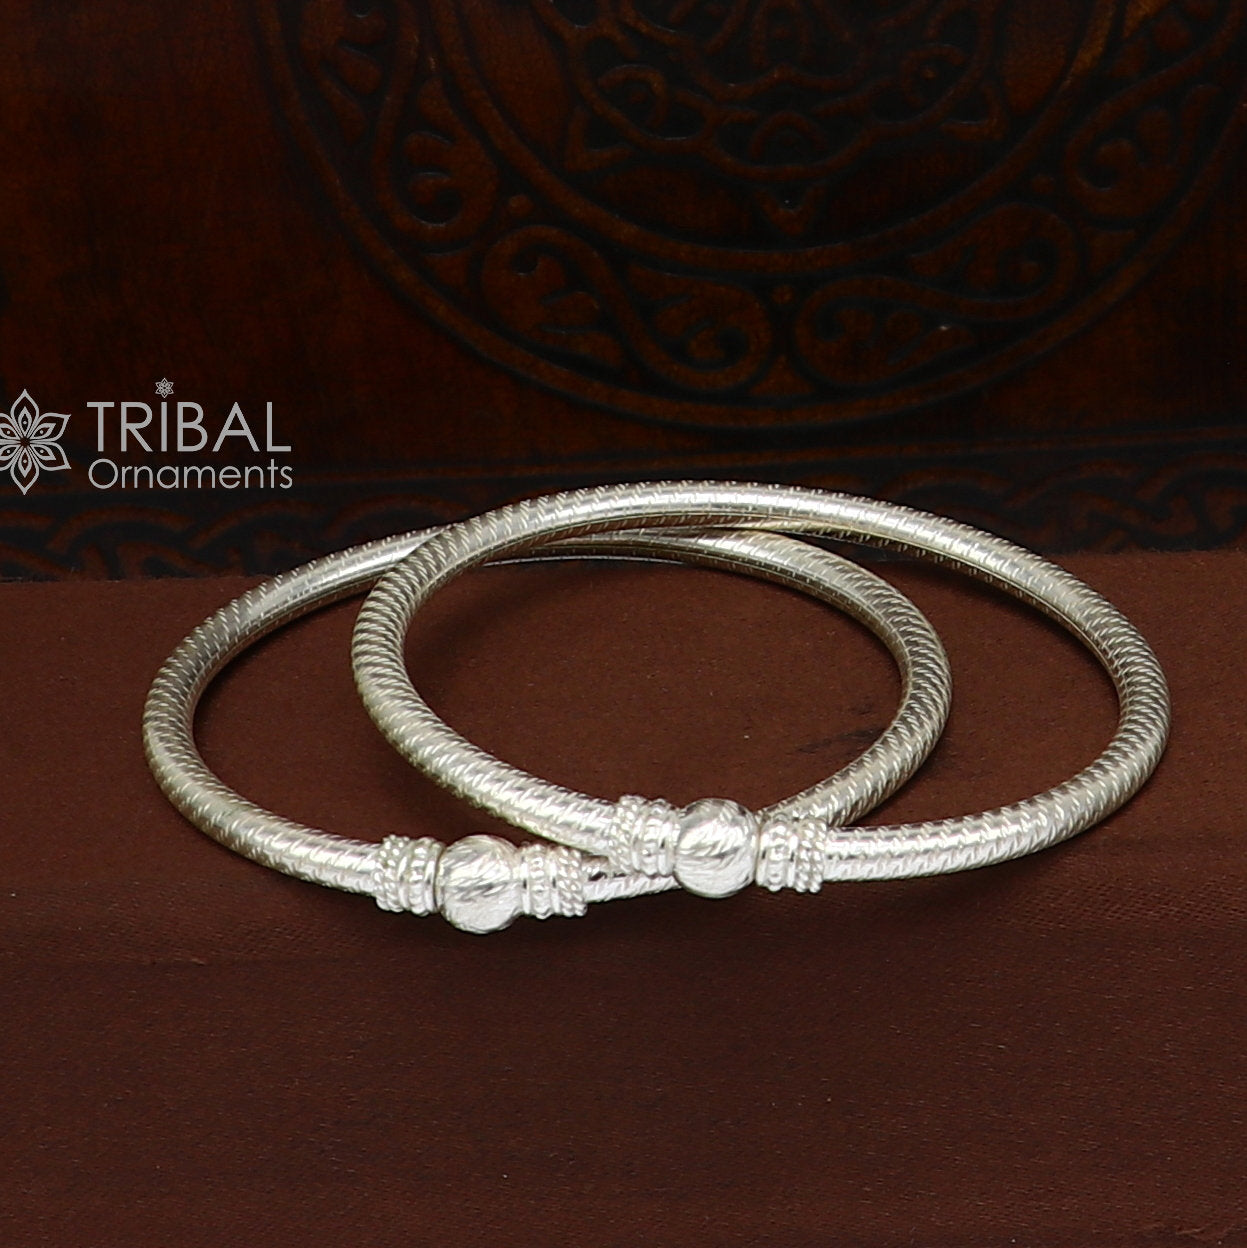 Buy Premium 925 Sterling Silver Bracelets for Women & Girls – CLARA